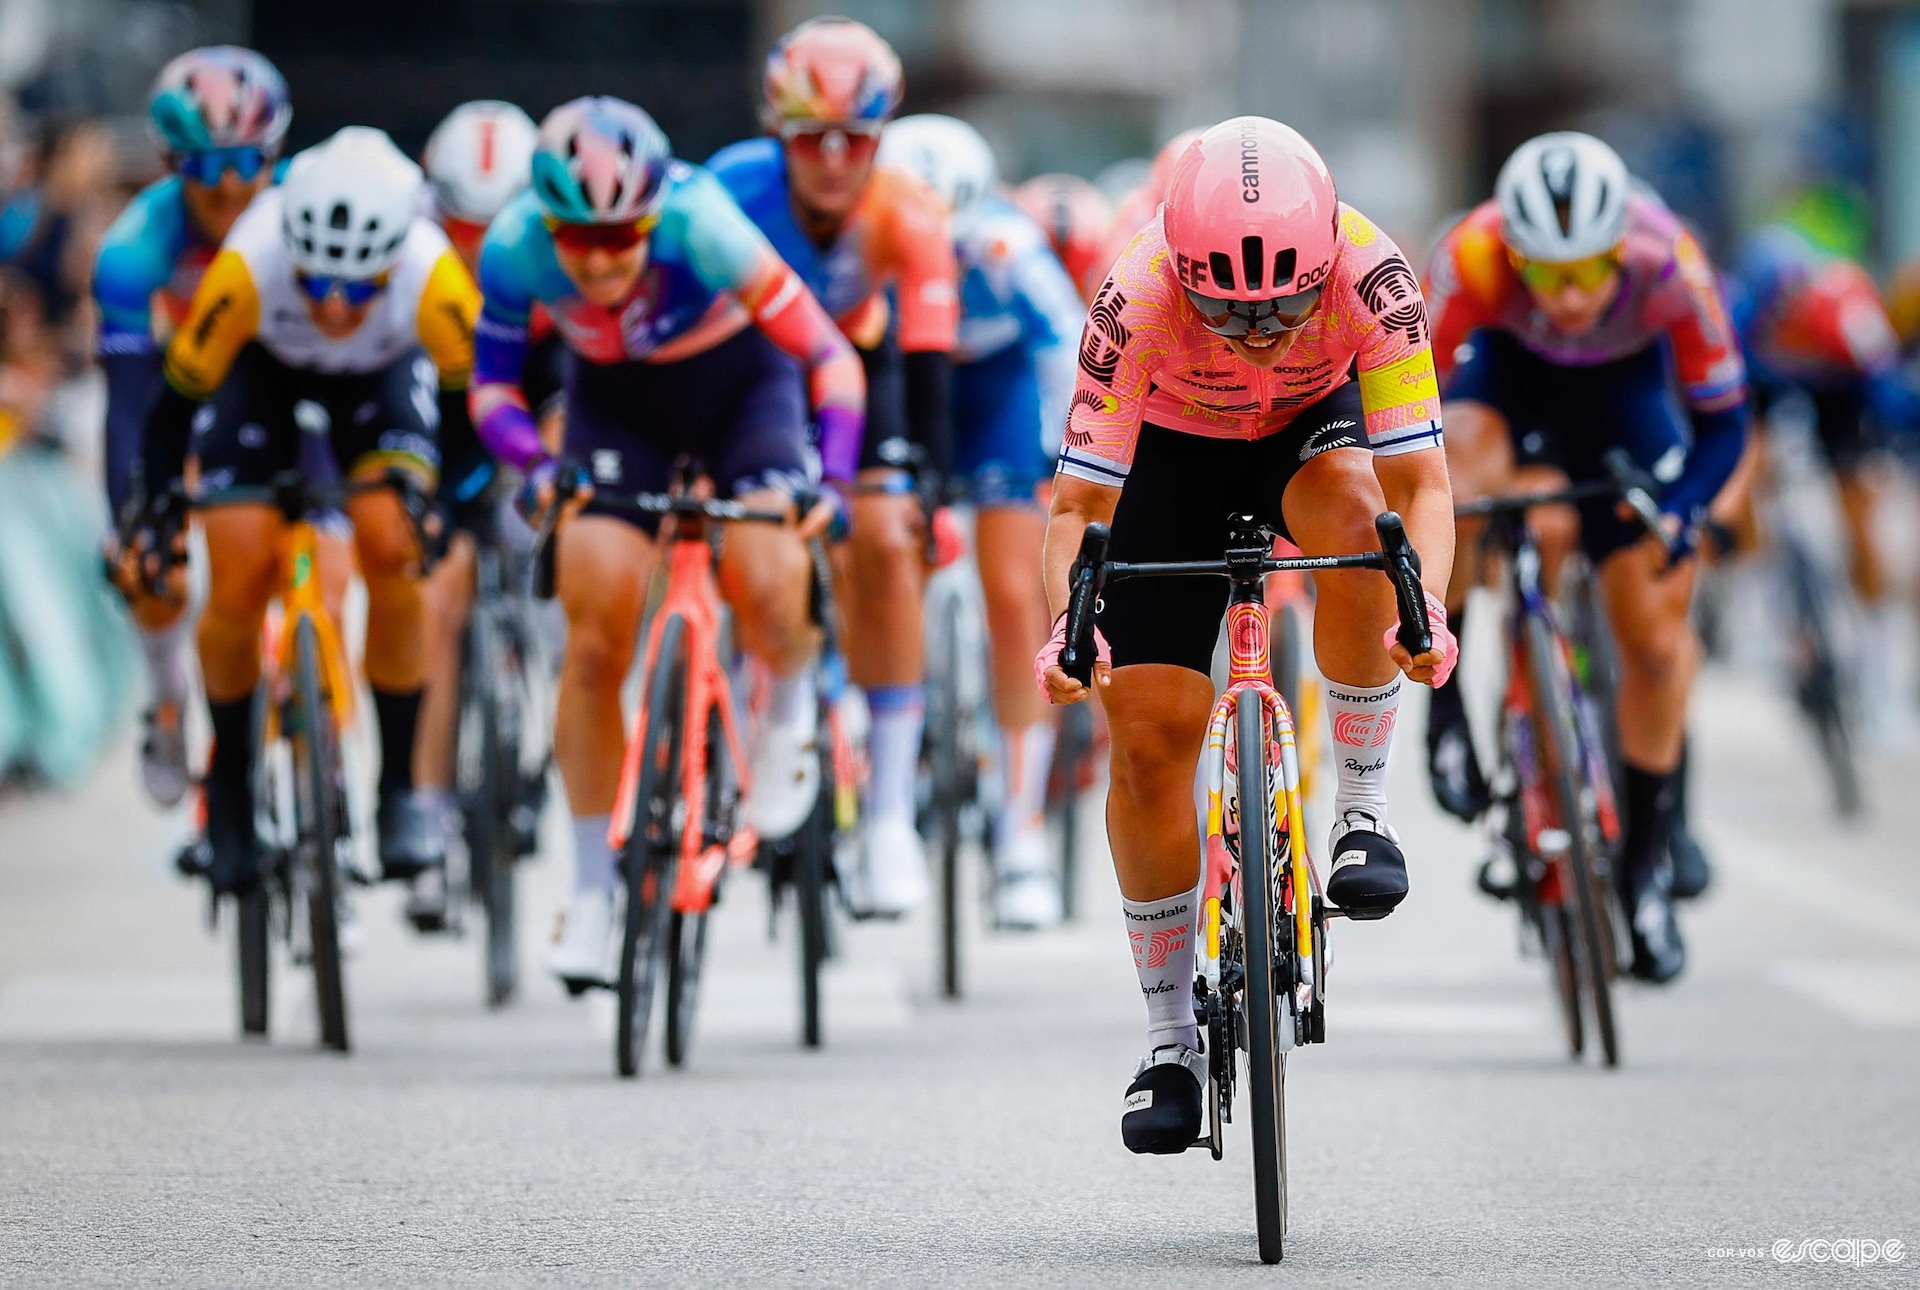 Lotta Hettala leads the peloton into the finish of Vuelta a Burgos Stage 1.